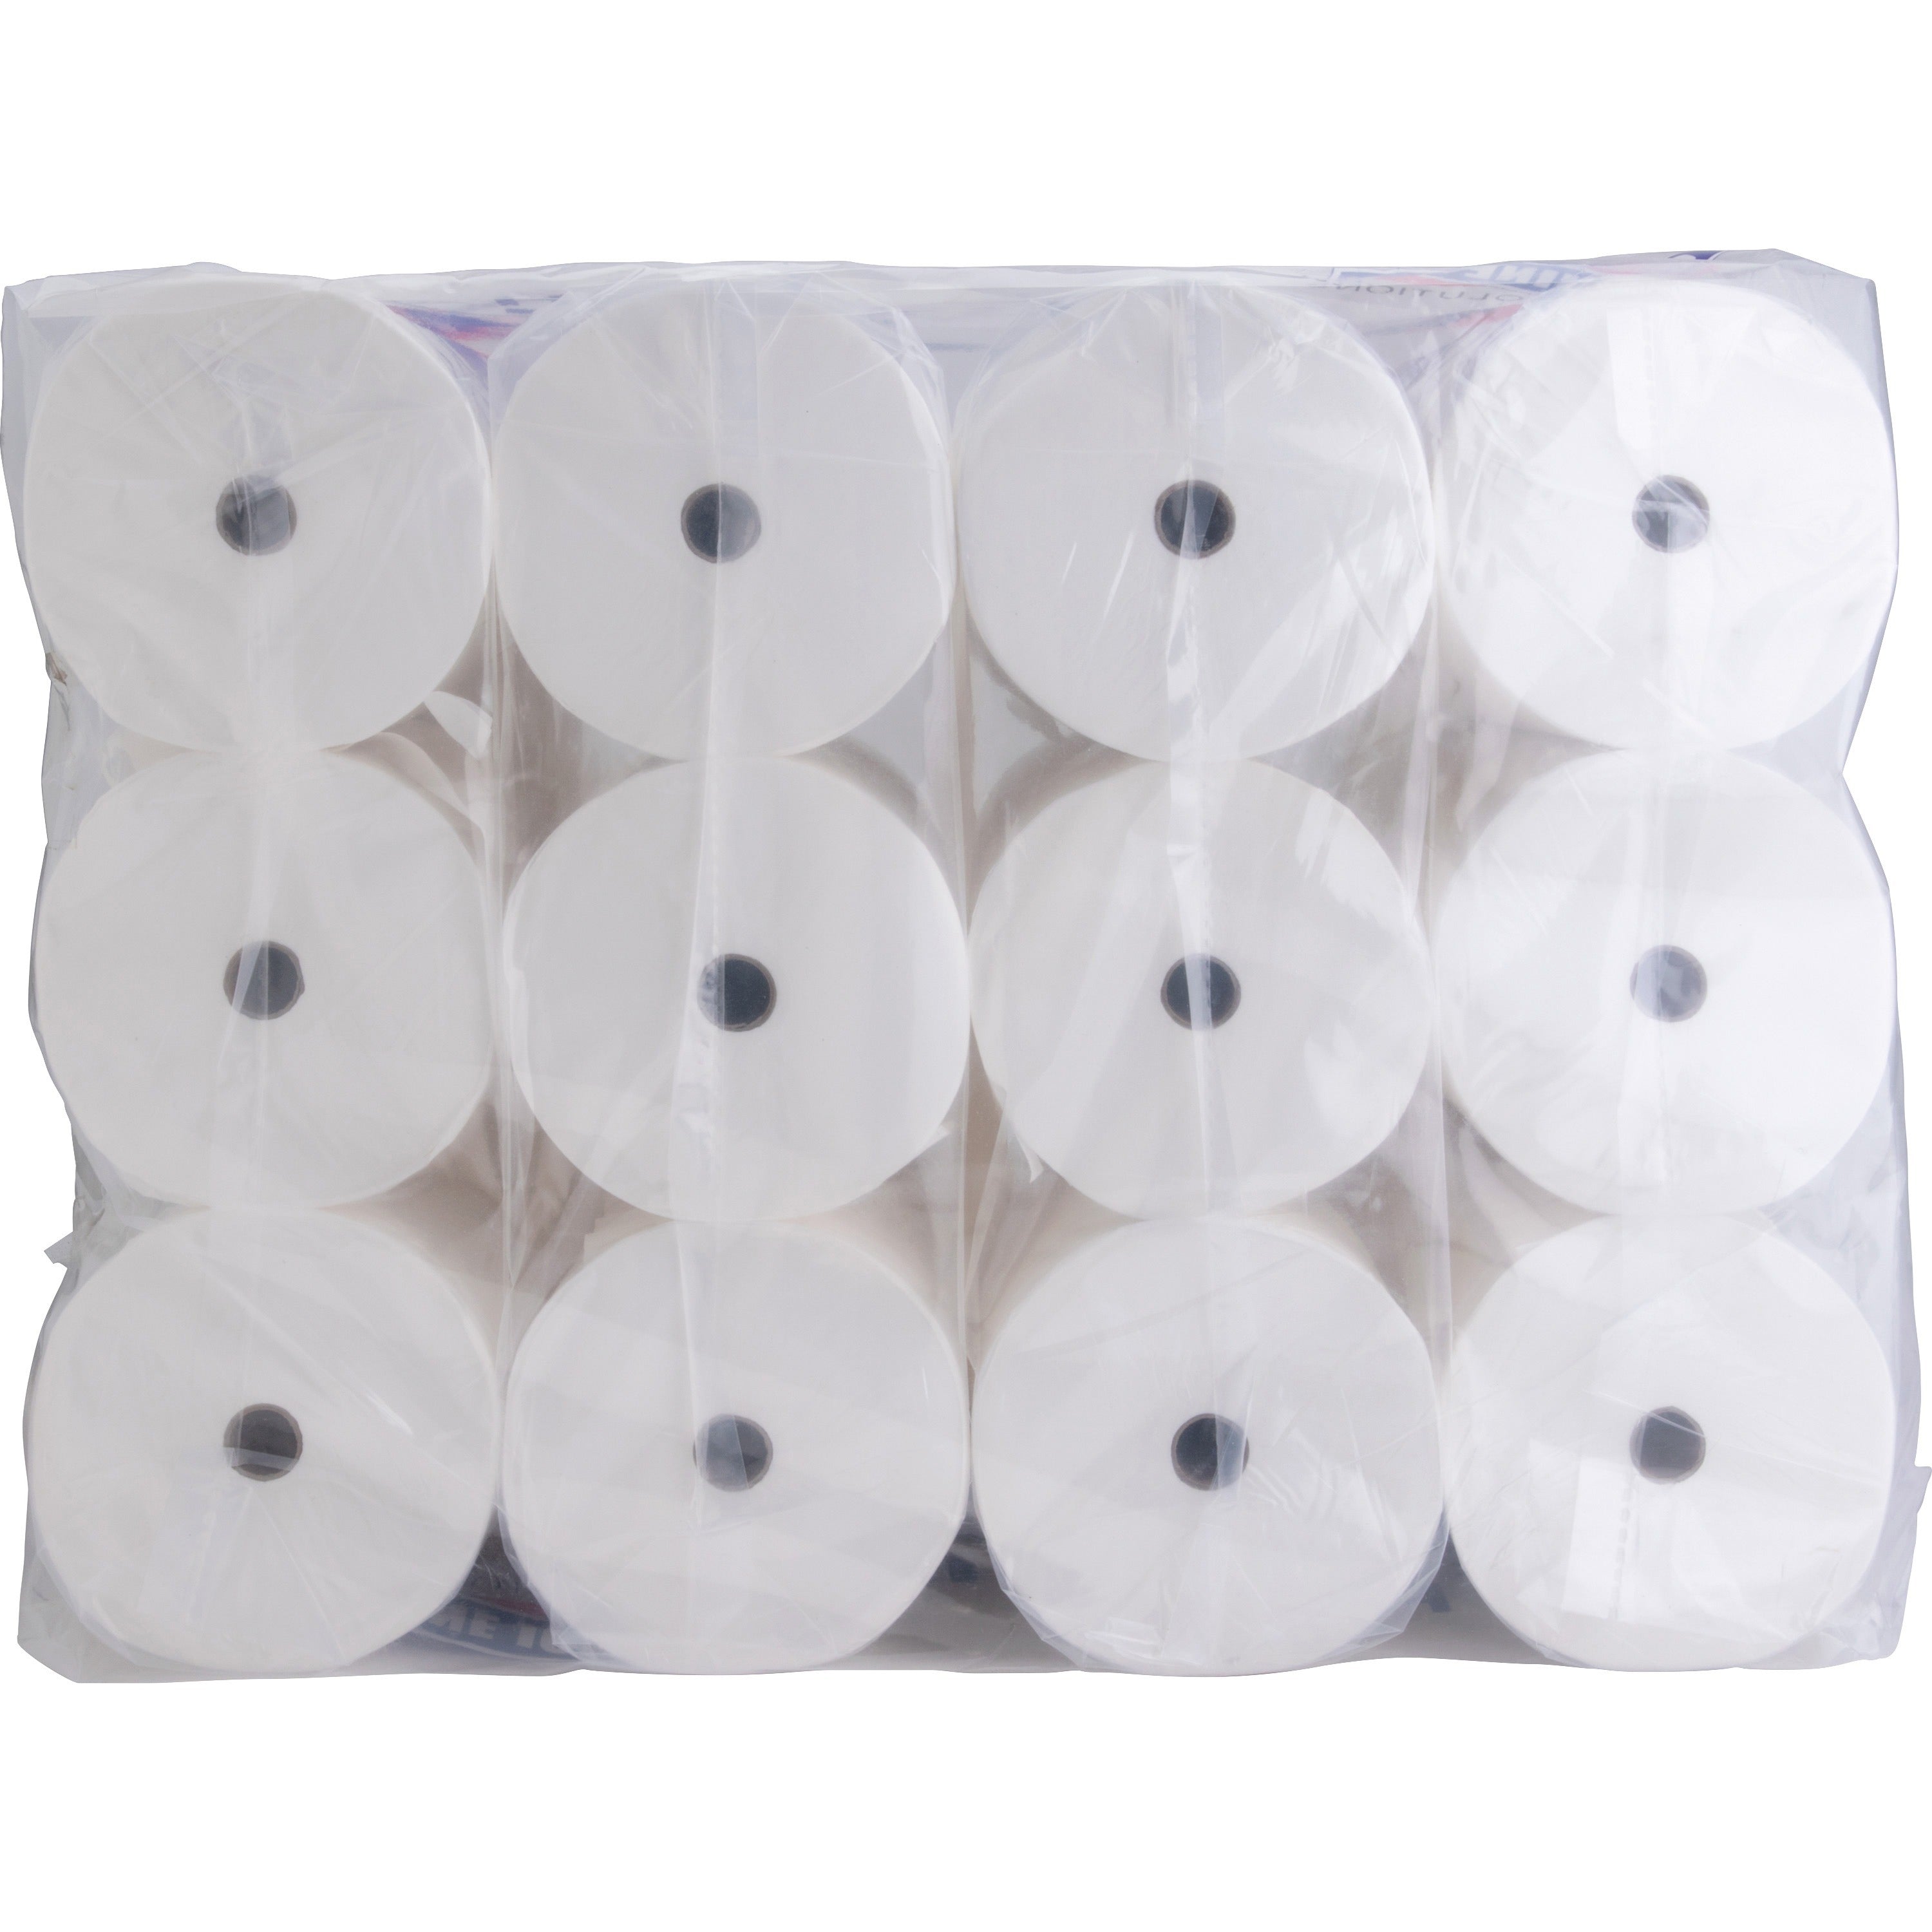 genuine-joe-solutions-double-capacity-bath-tissue-2-ply-1000-sheets-roll-071-core-white-virgin-fiber-embossed-chlorine-free-for-bathroom-36-carton_gjo91000 - 5